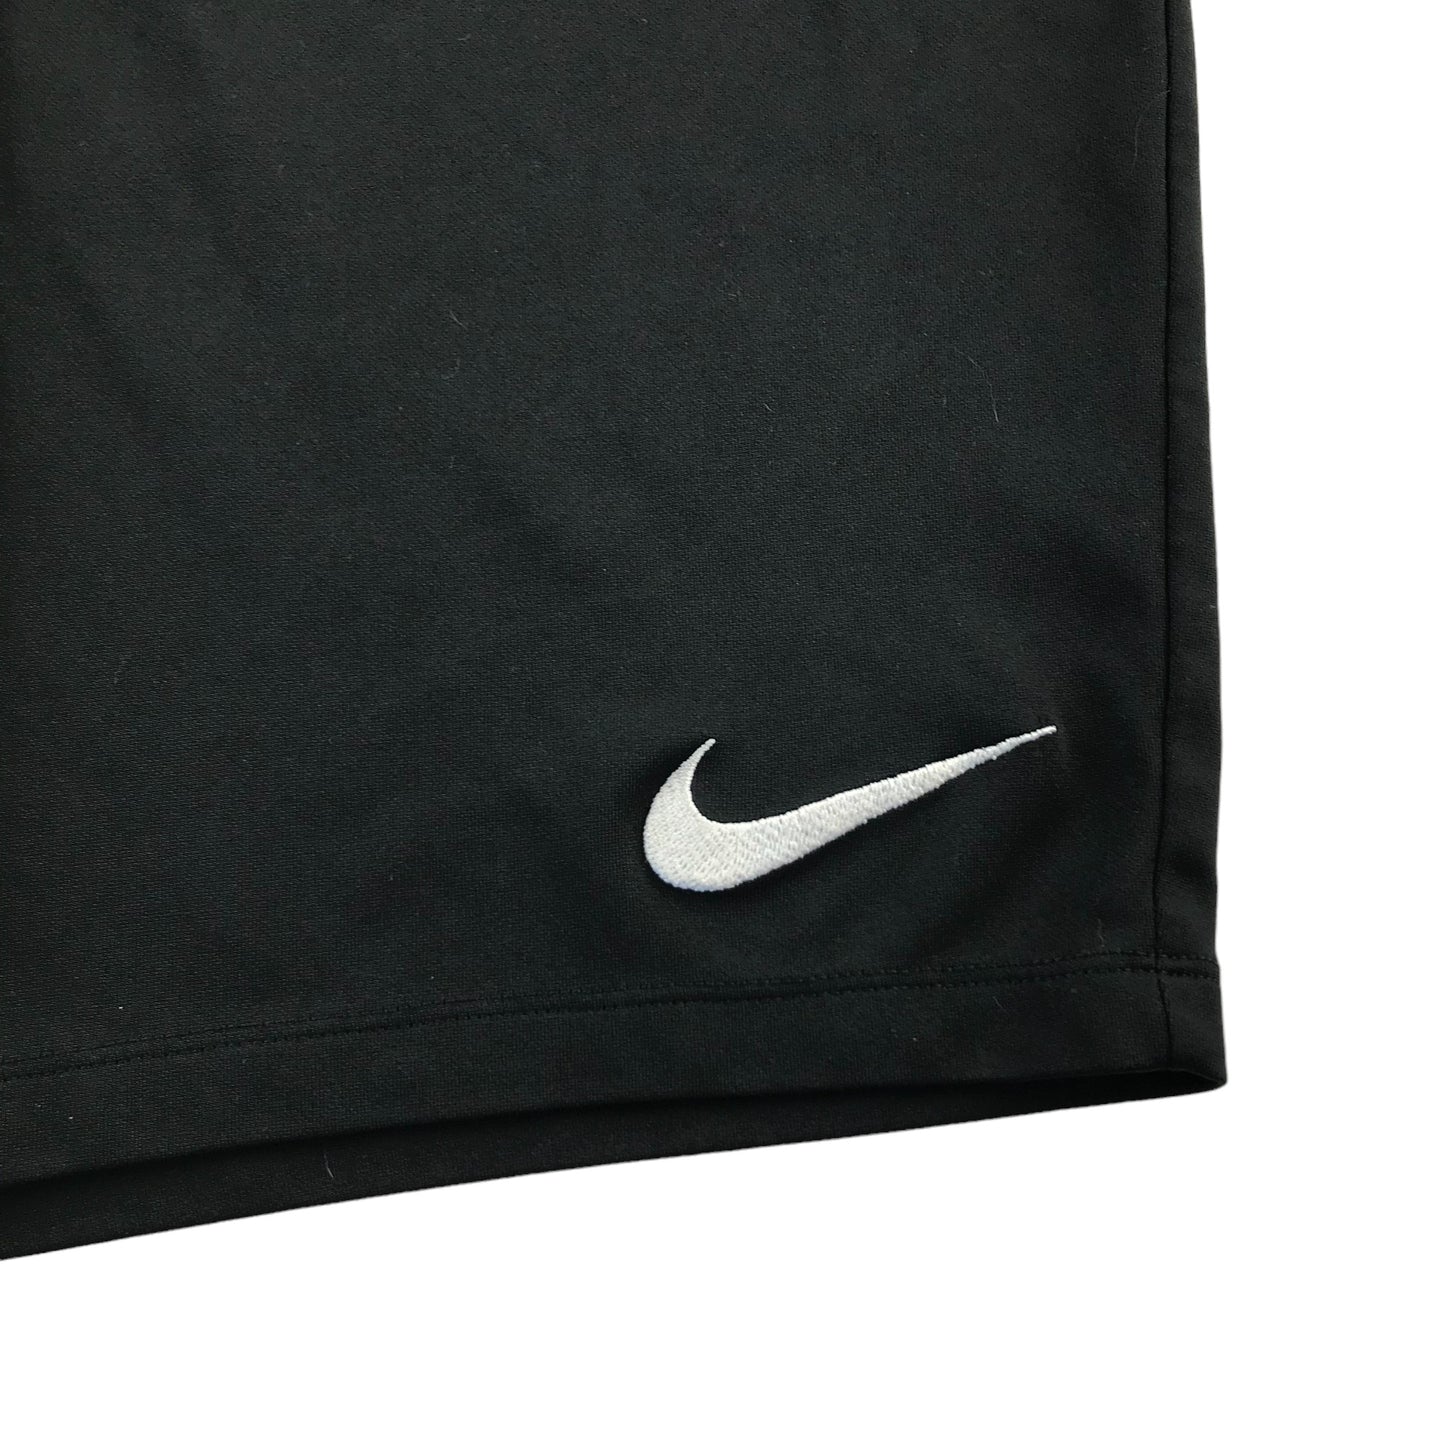 Nike Sport Shorts Size Adult L Black Plain with Logo